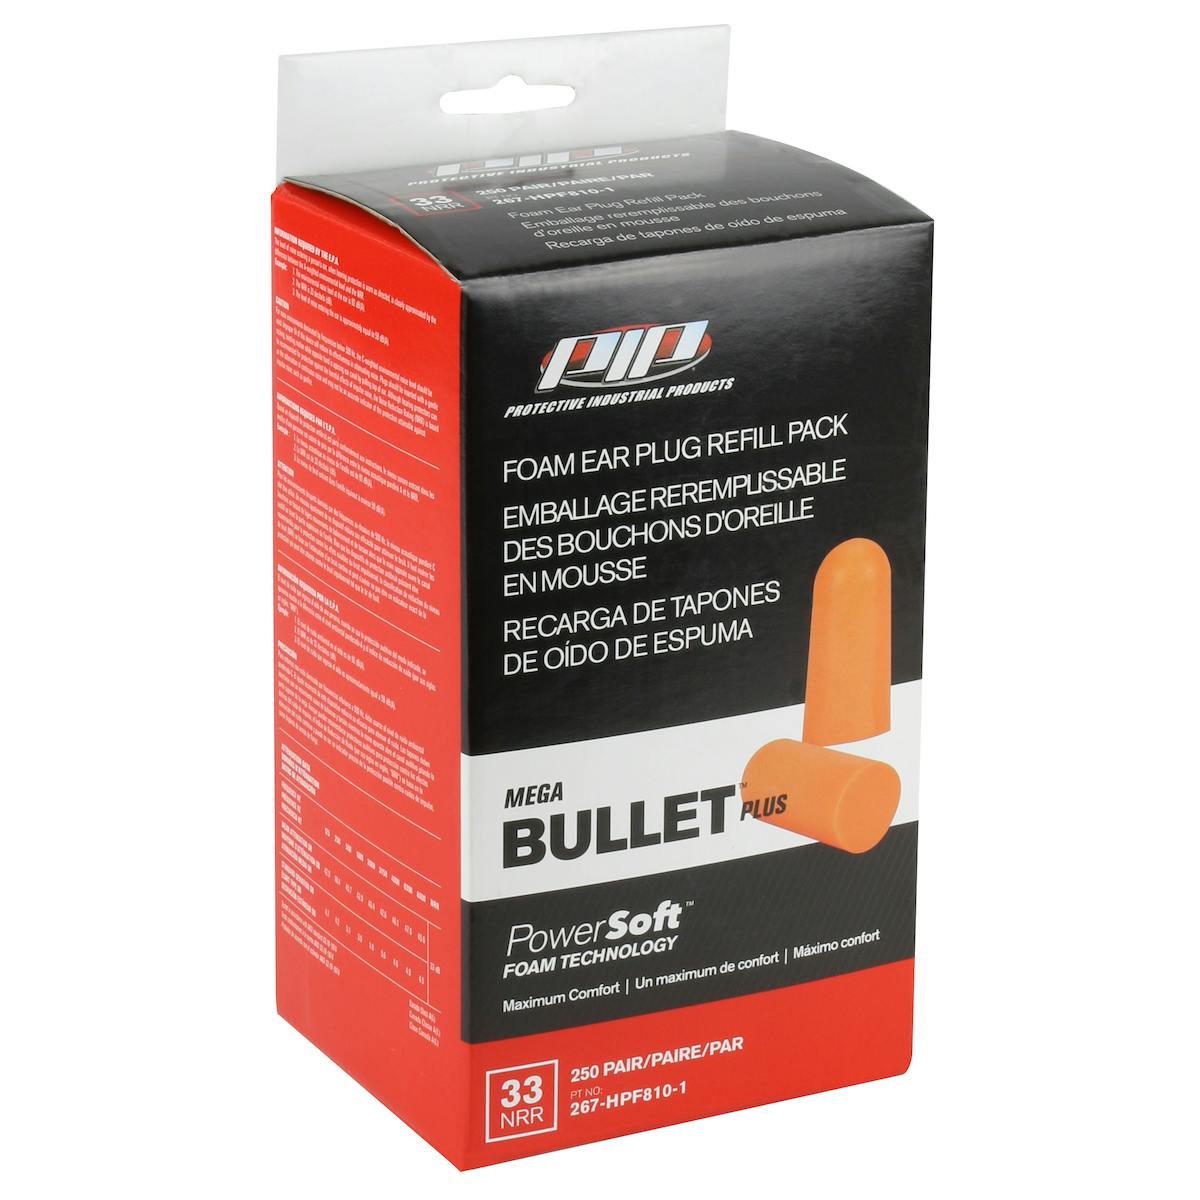 Disposable Soft Polyurethane Foam Ear Plugs - Dispenser Refill Pack, Orange (267-HPF810-1) - OS